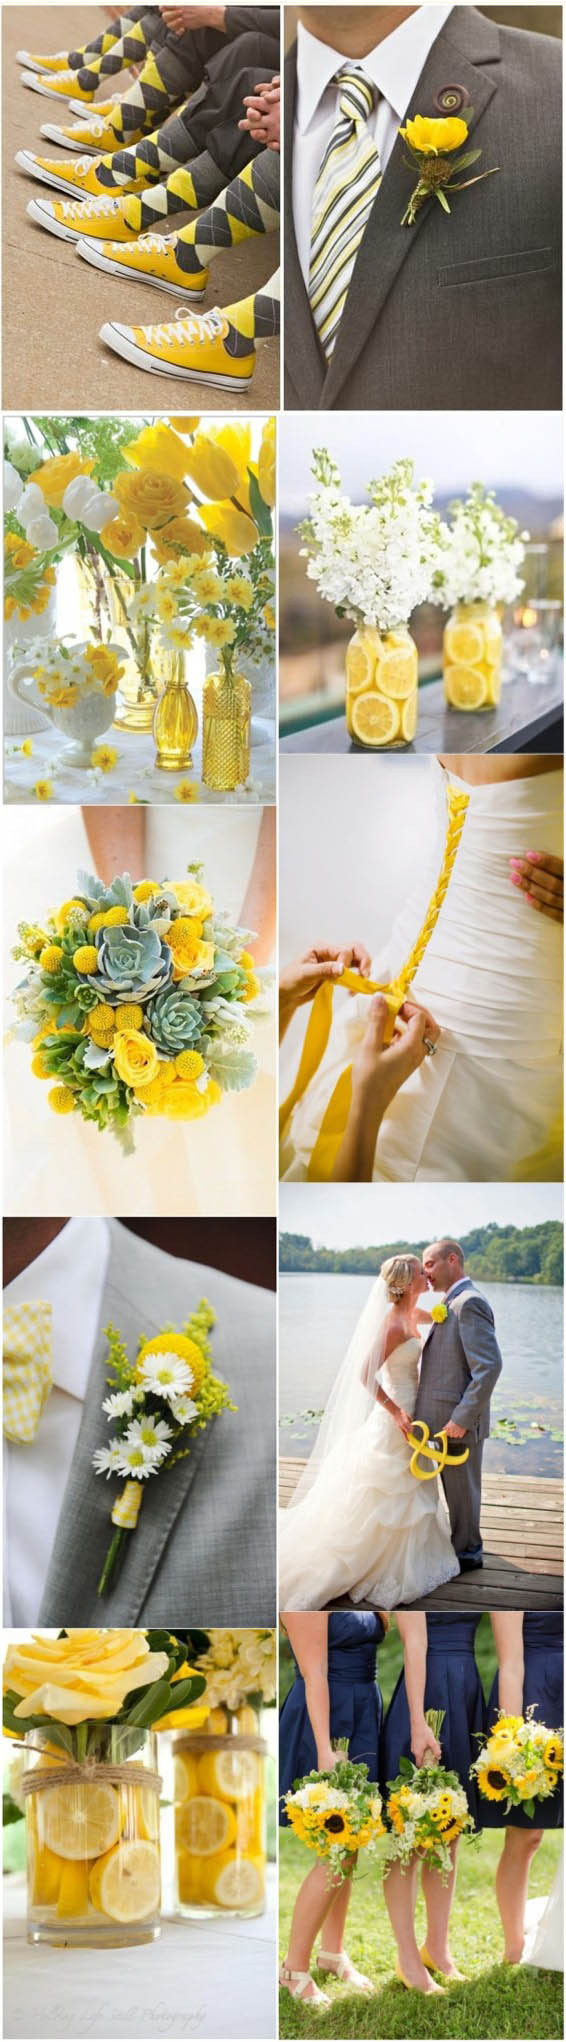 Springtime Wedding Themes
 2019 Spring Wedding Color and Ideas